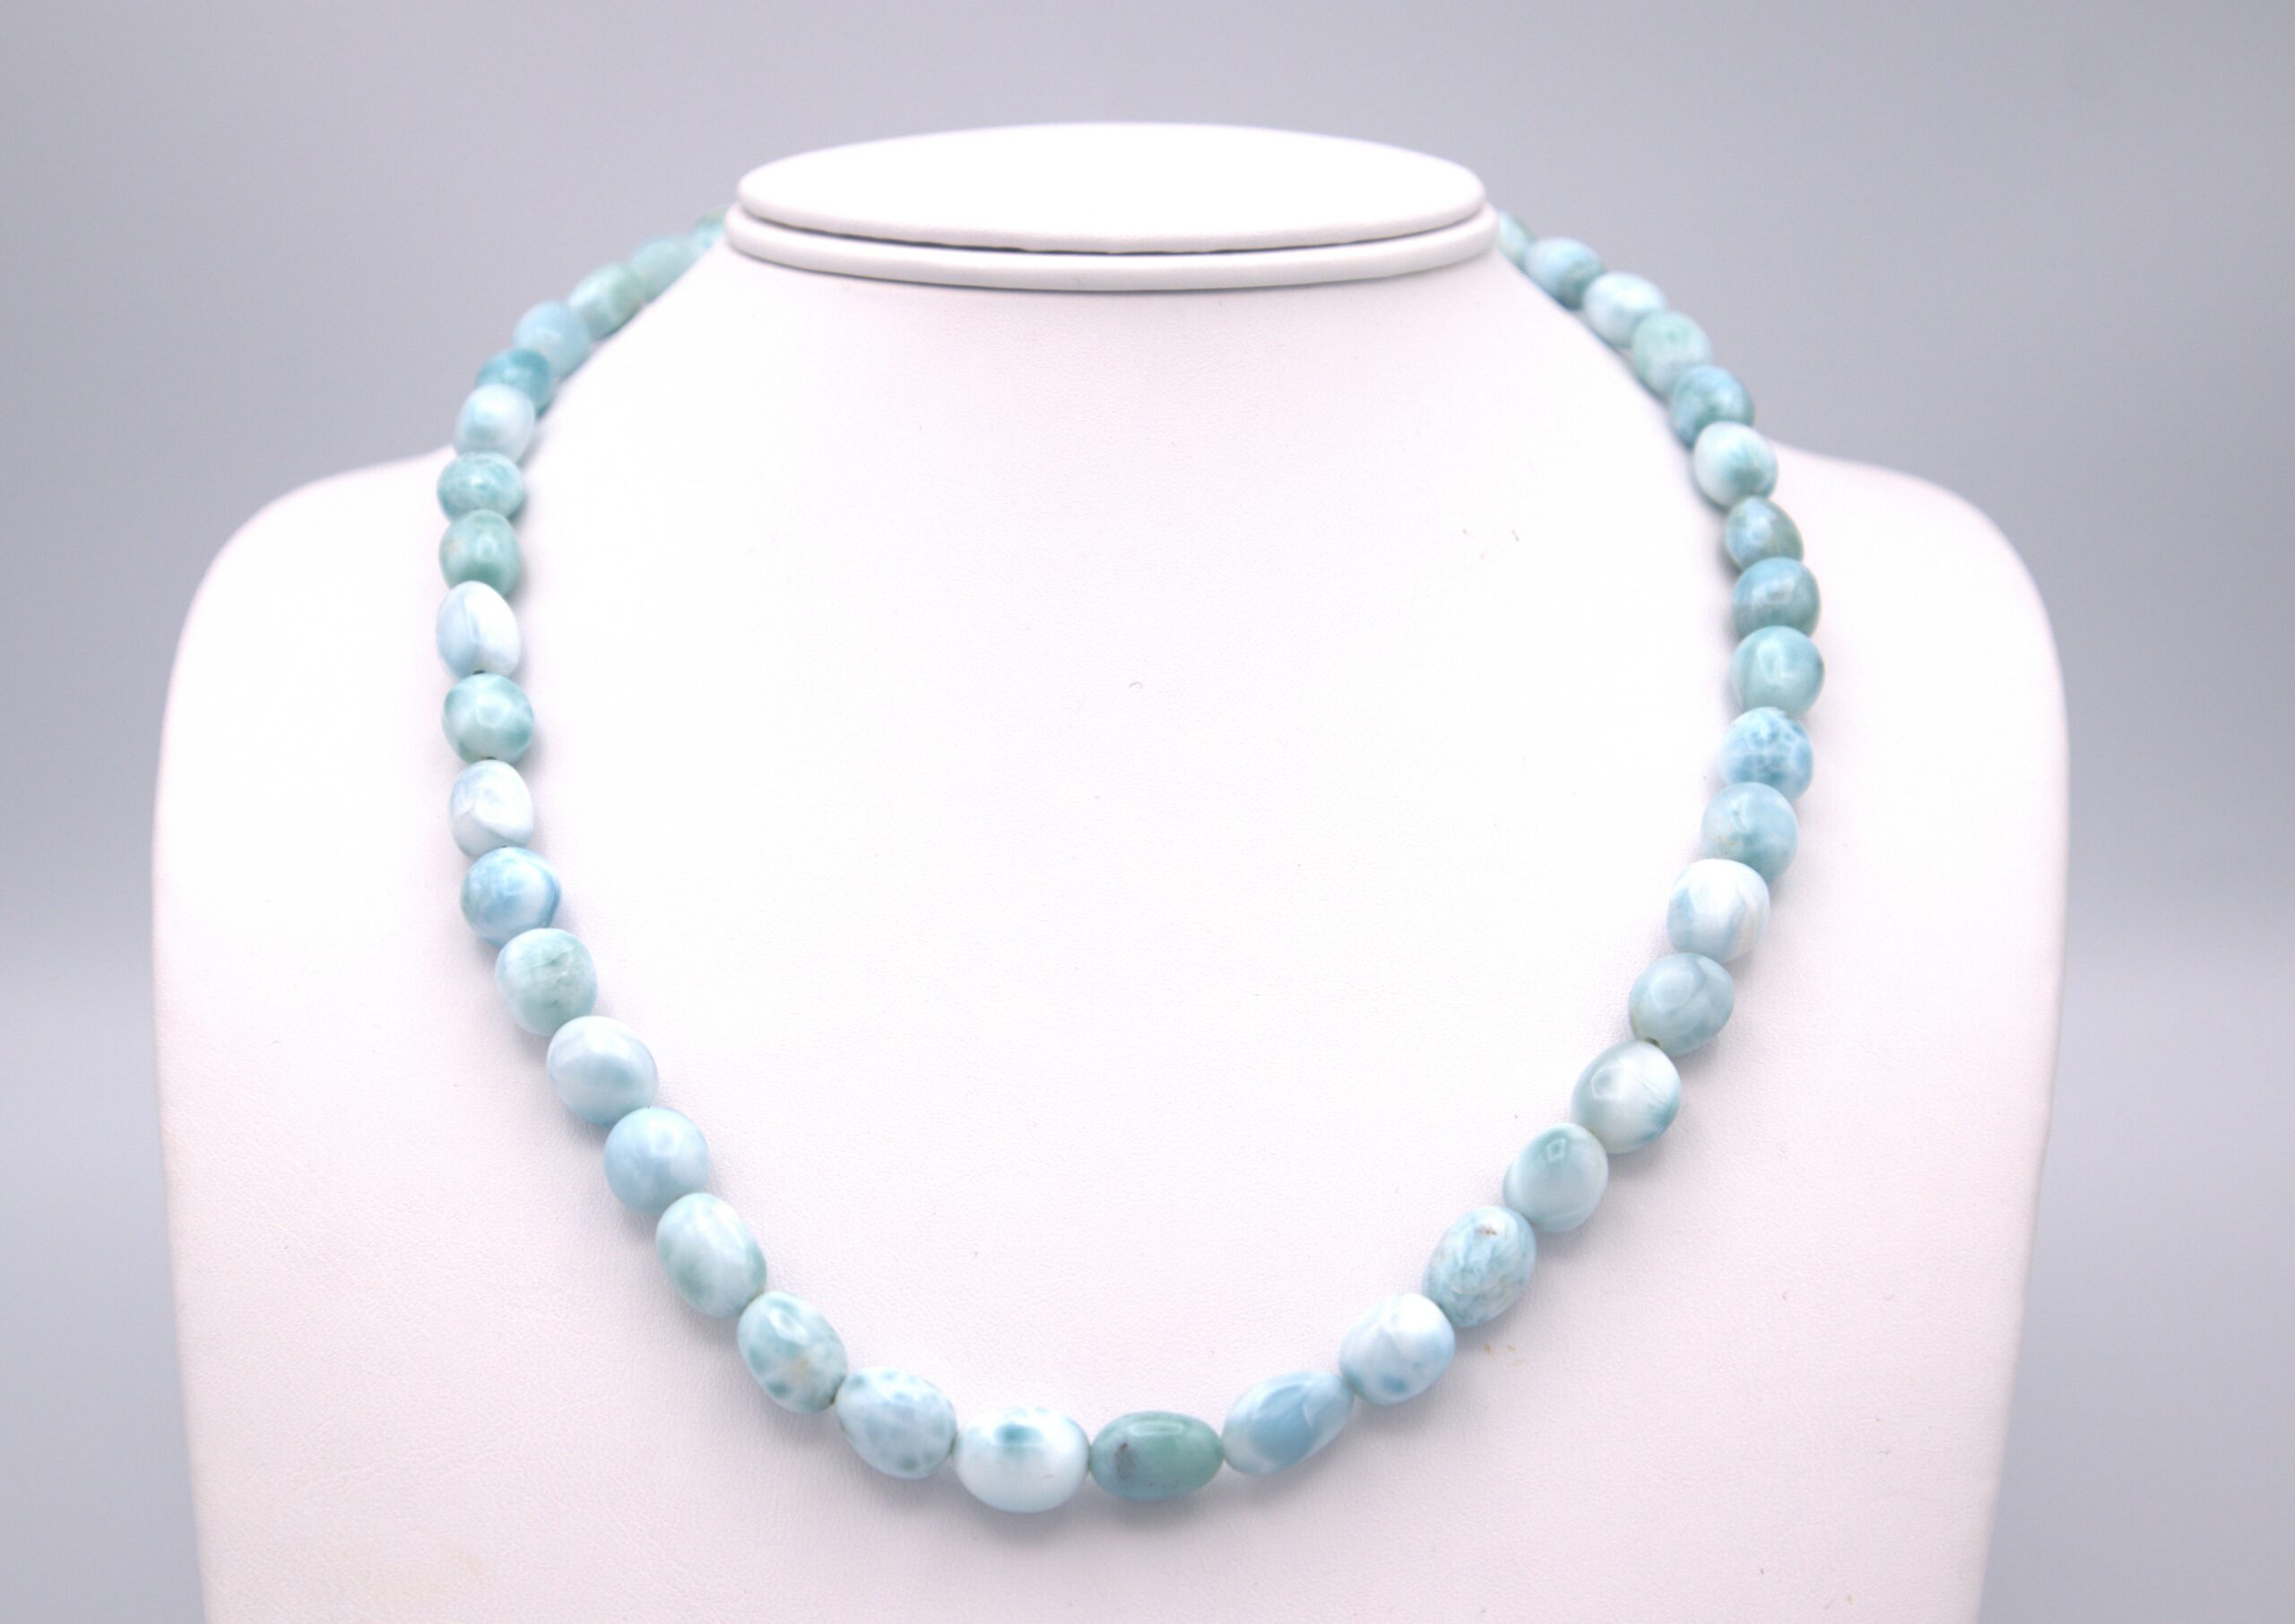 Larimar bead necklace - The Lizzadro Museum of Lapidary Art